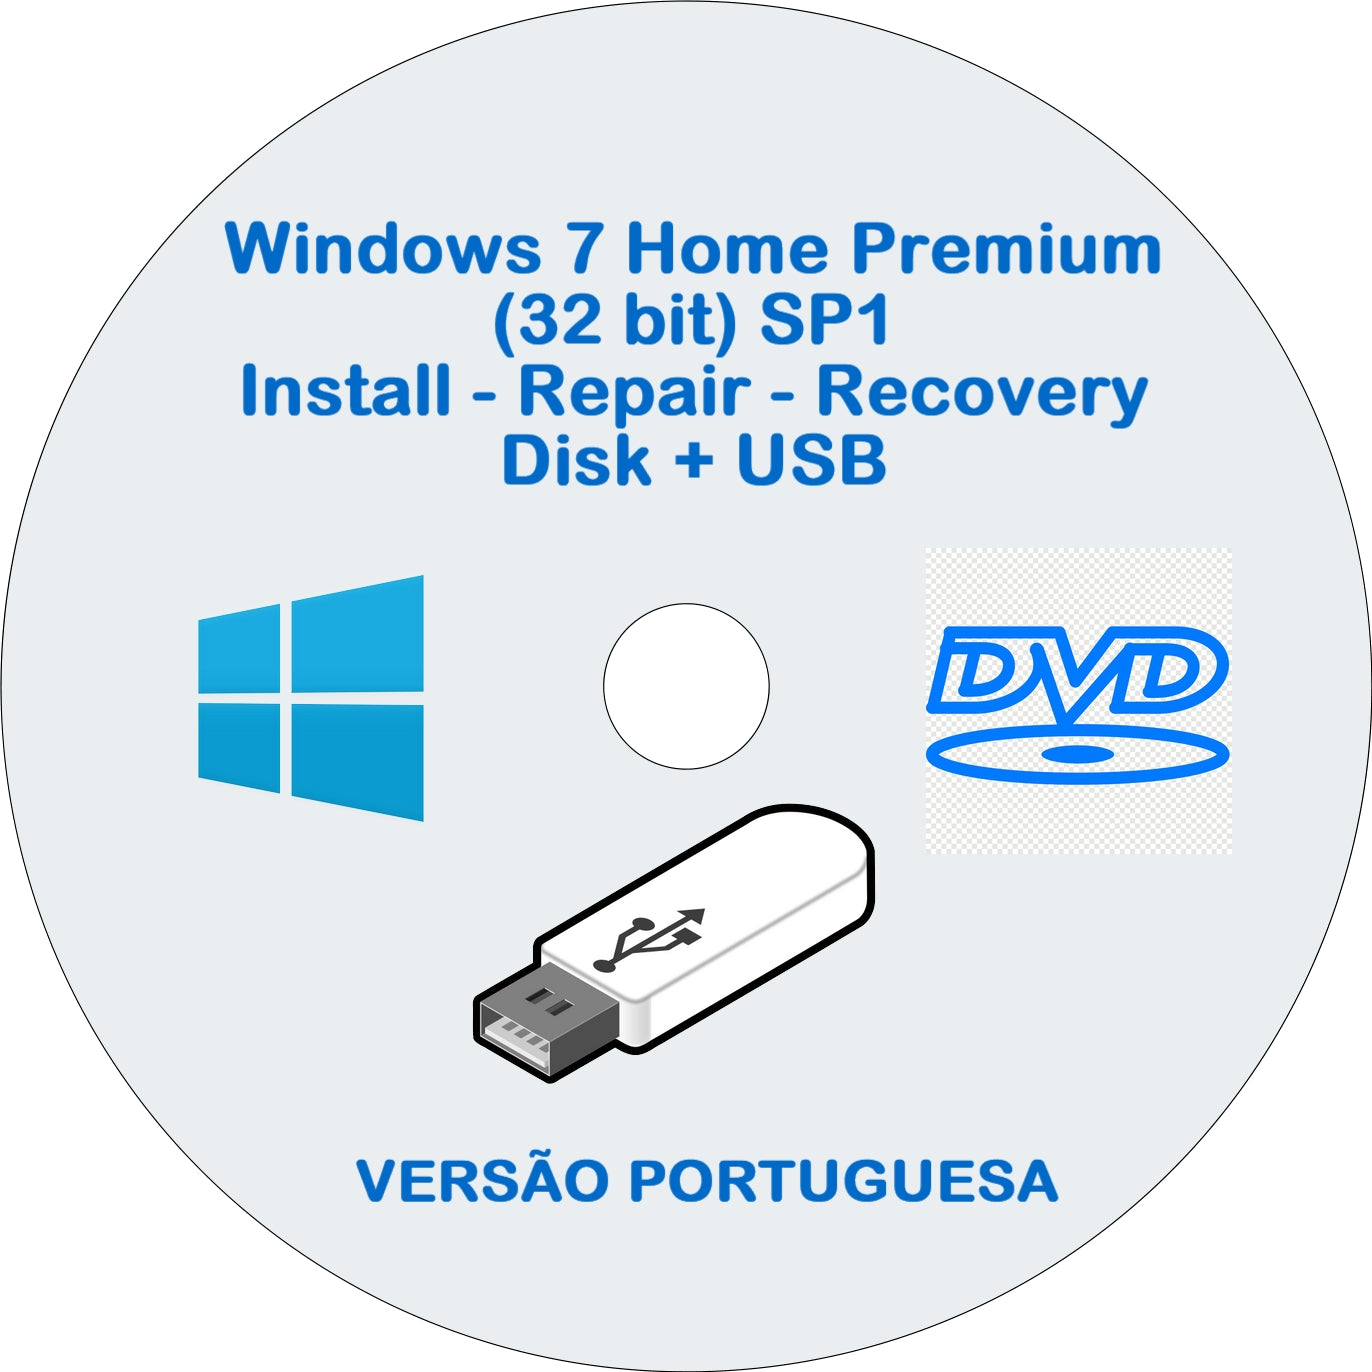 Windows 7 Home Premium Disk + USB 32 Bit